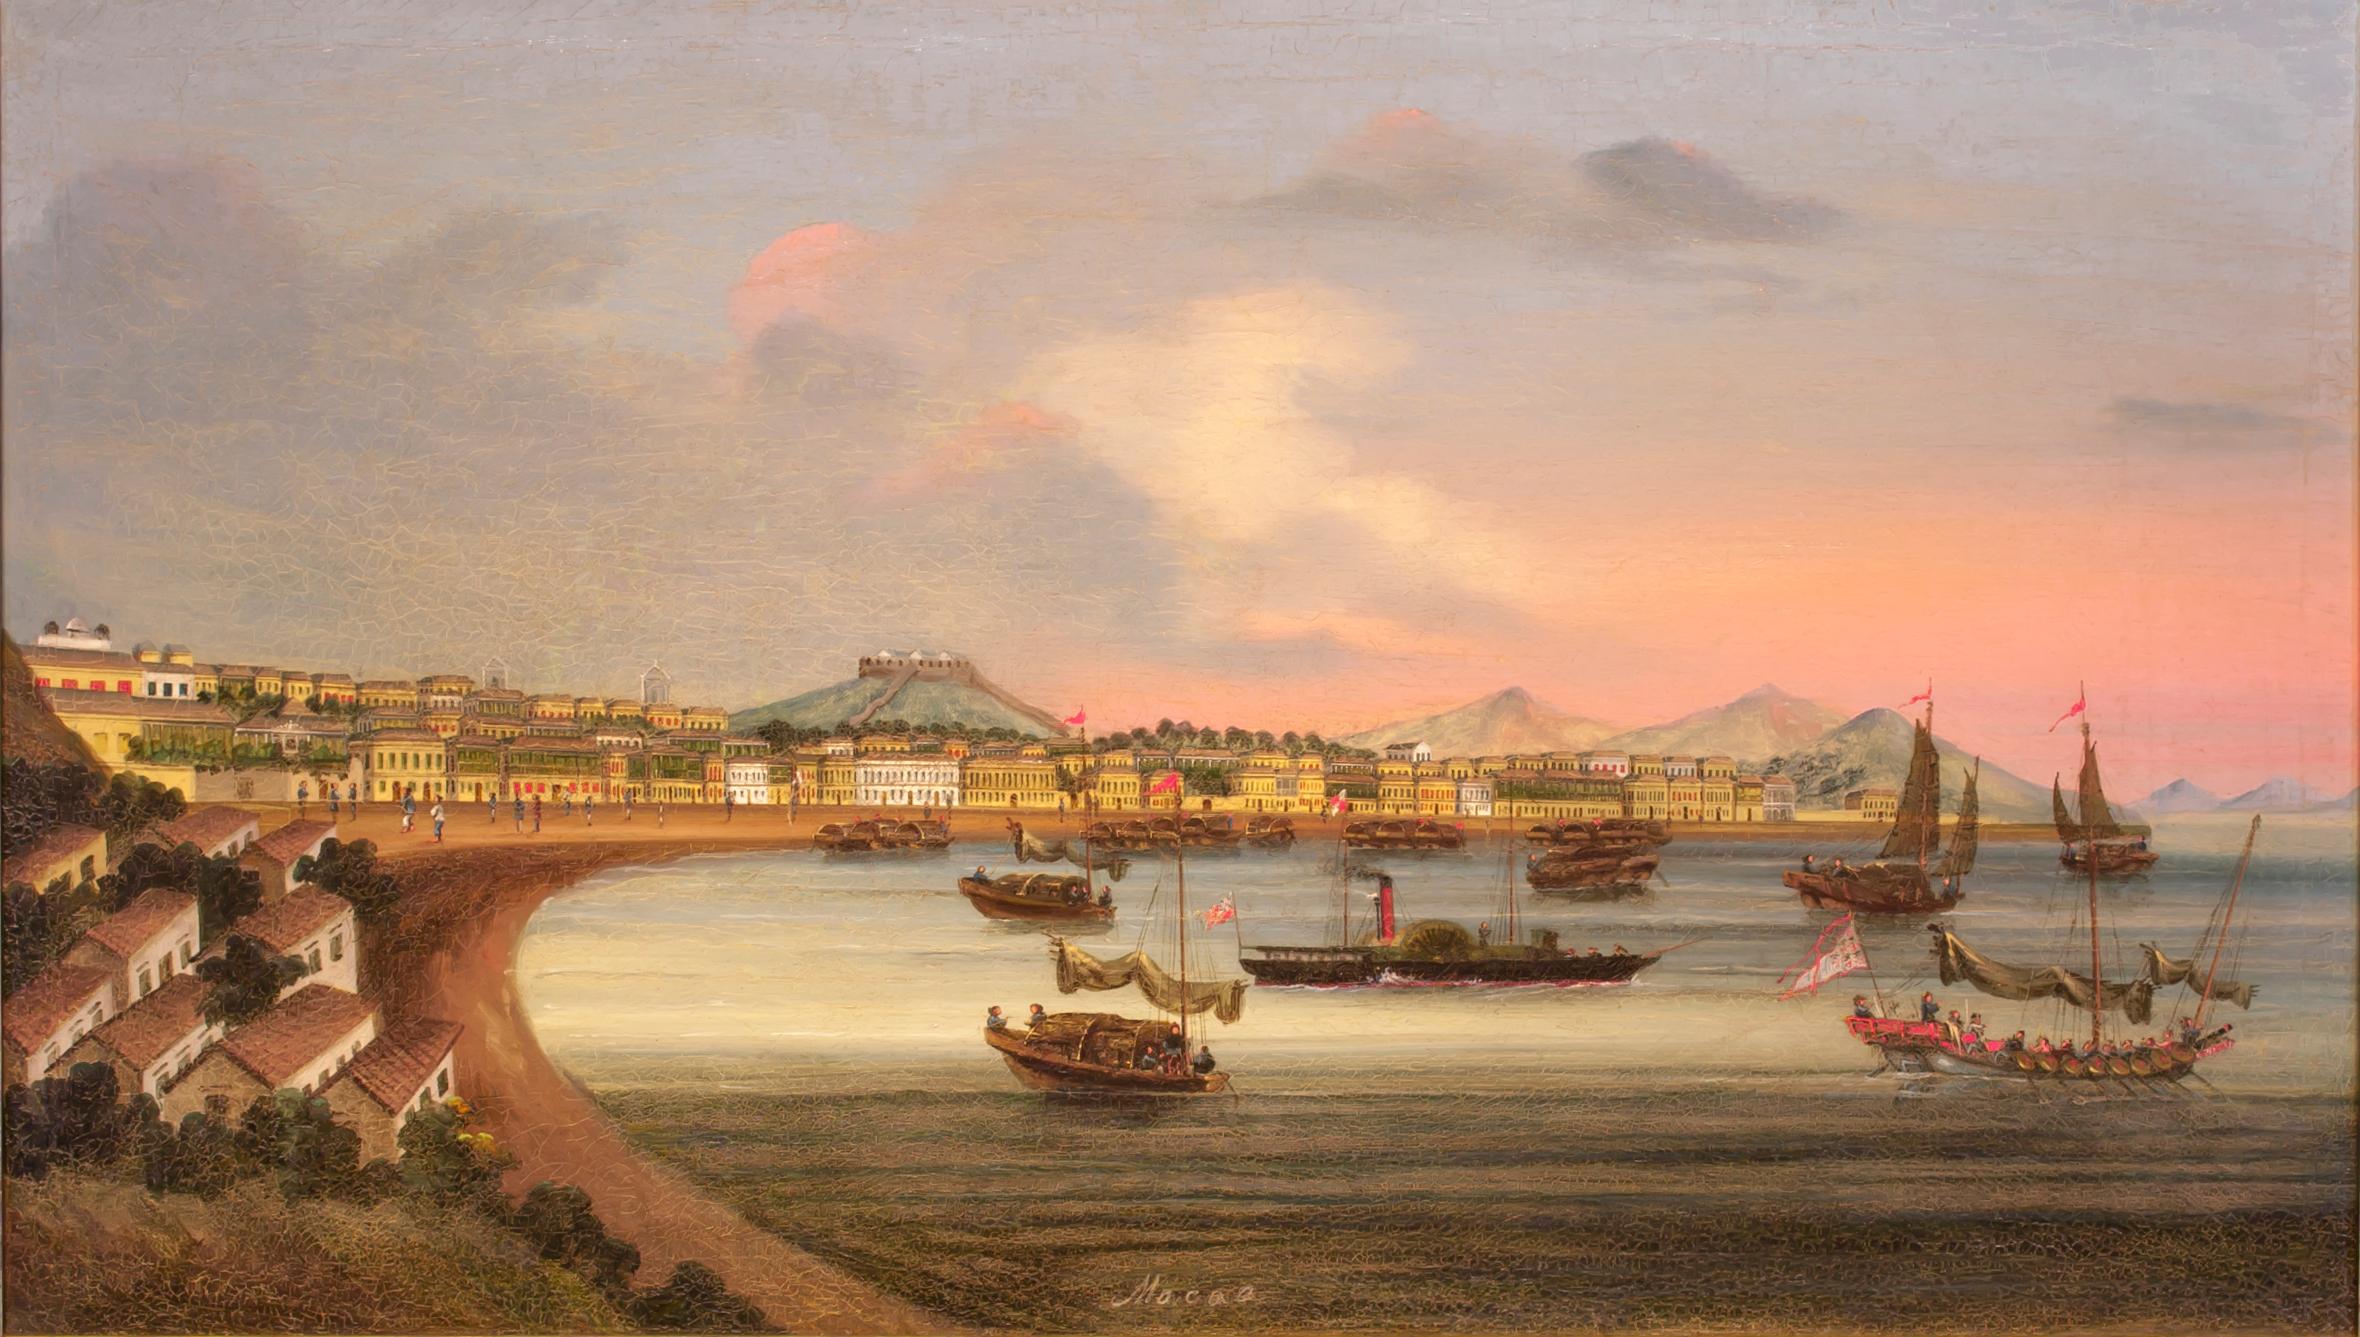 Macau – Painting von 19th Century Chinese school